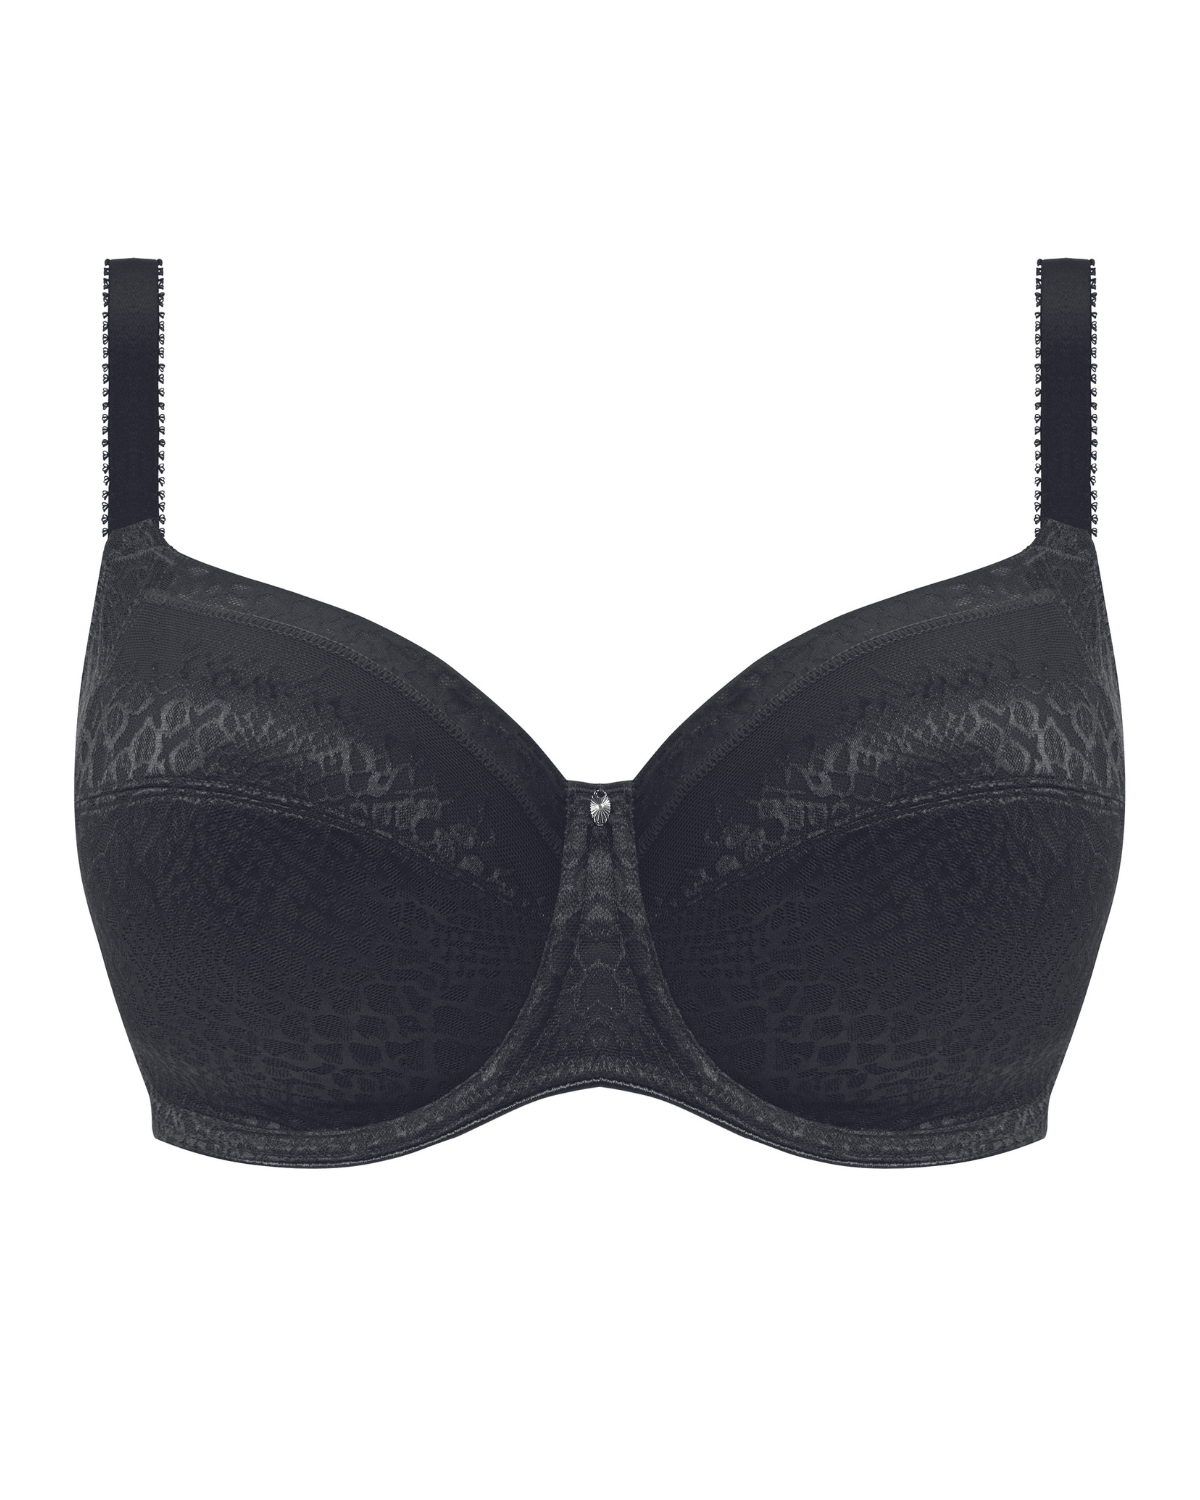 Model wearing a soft cup stretch underwire bra in black